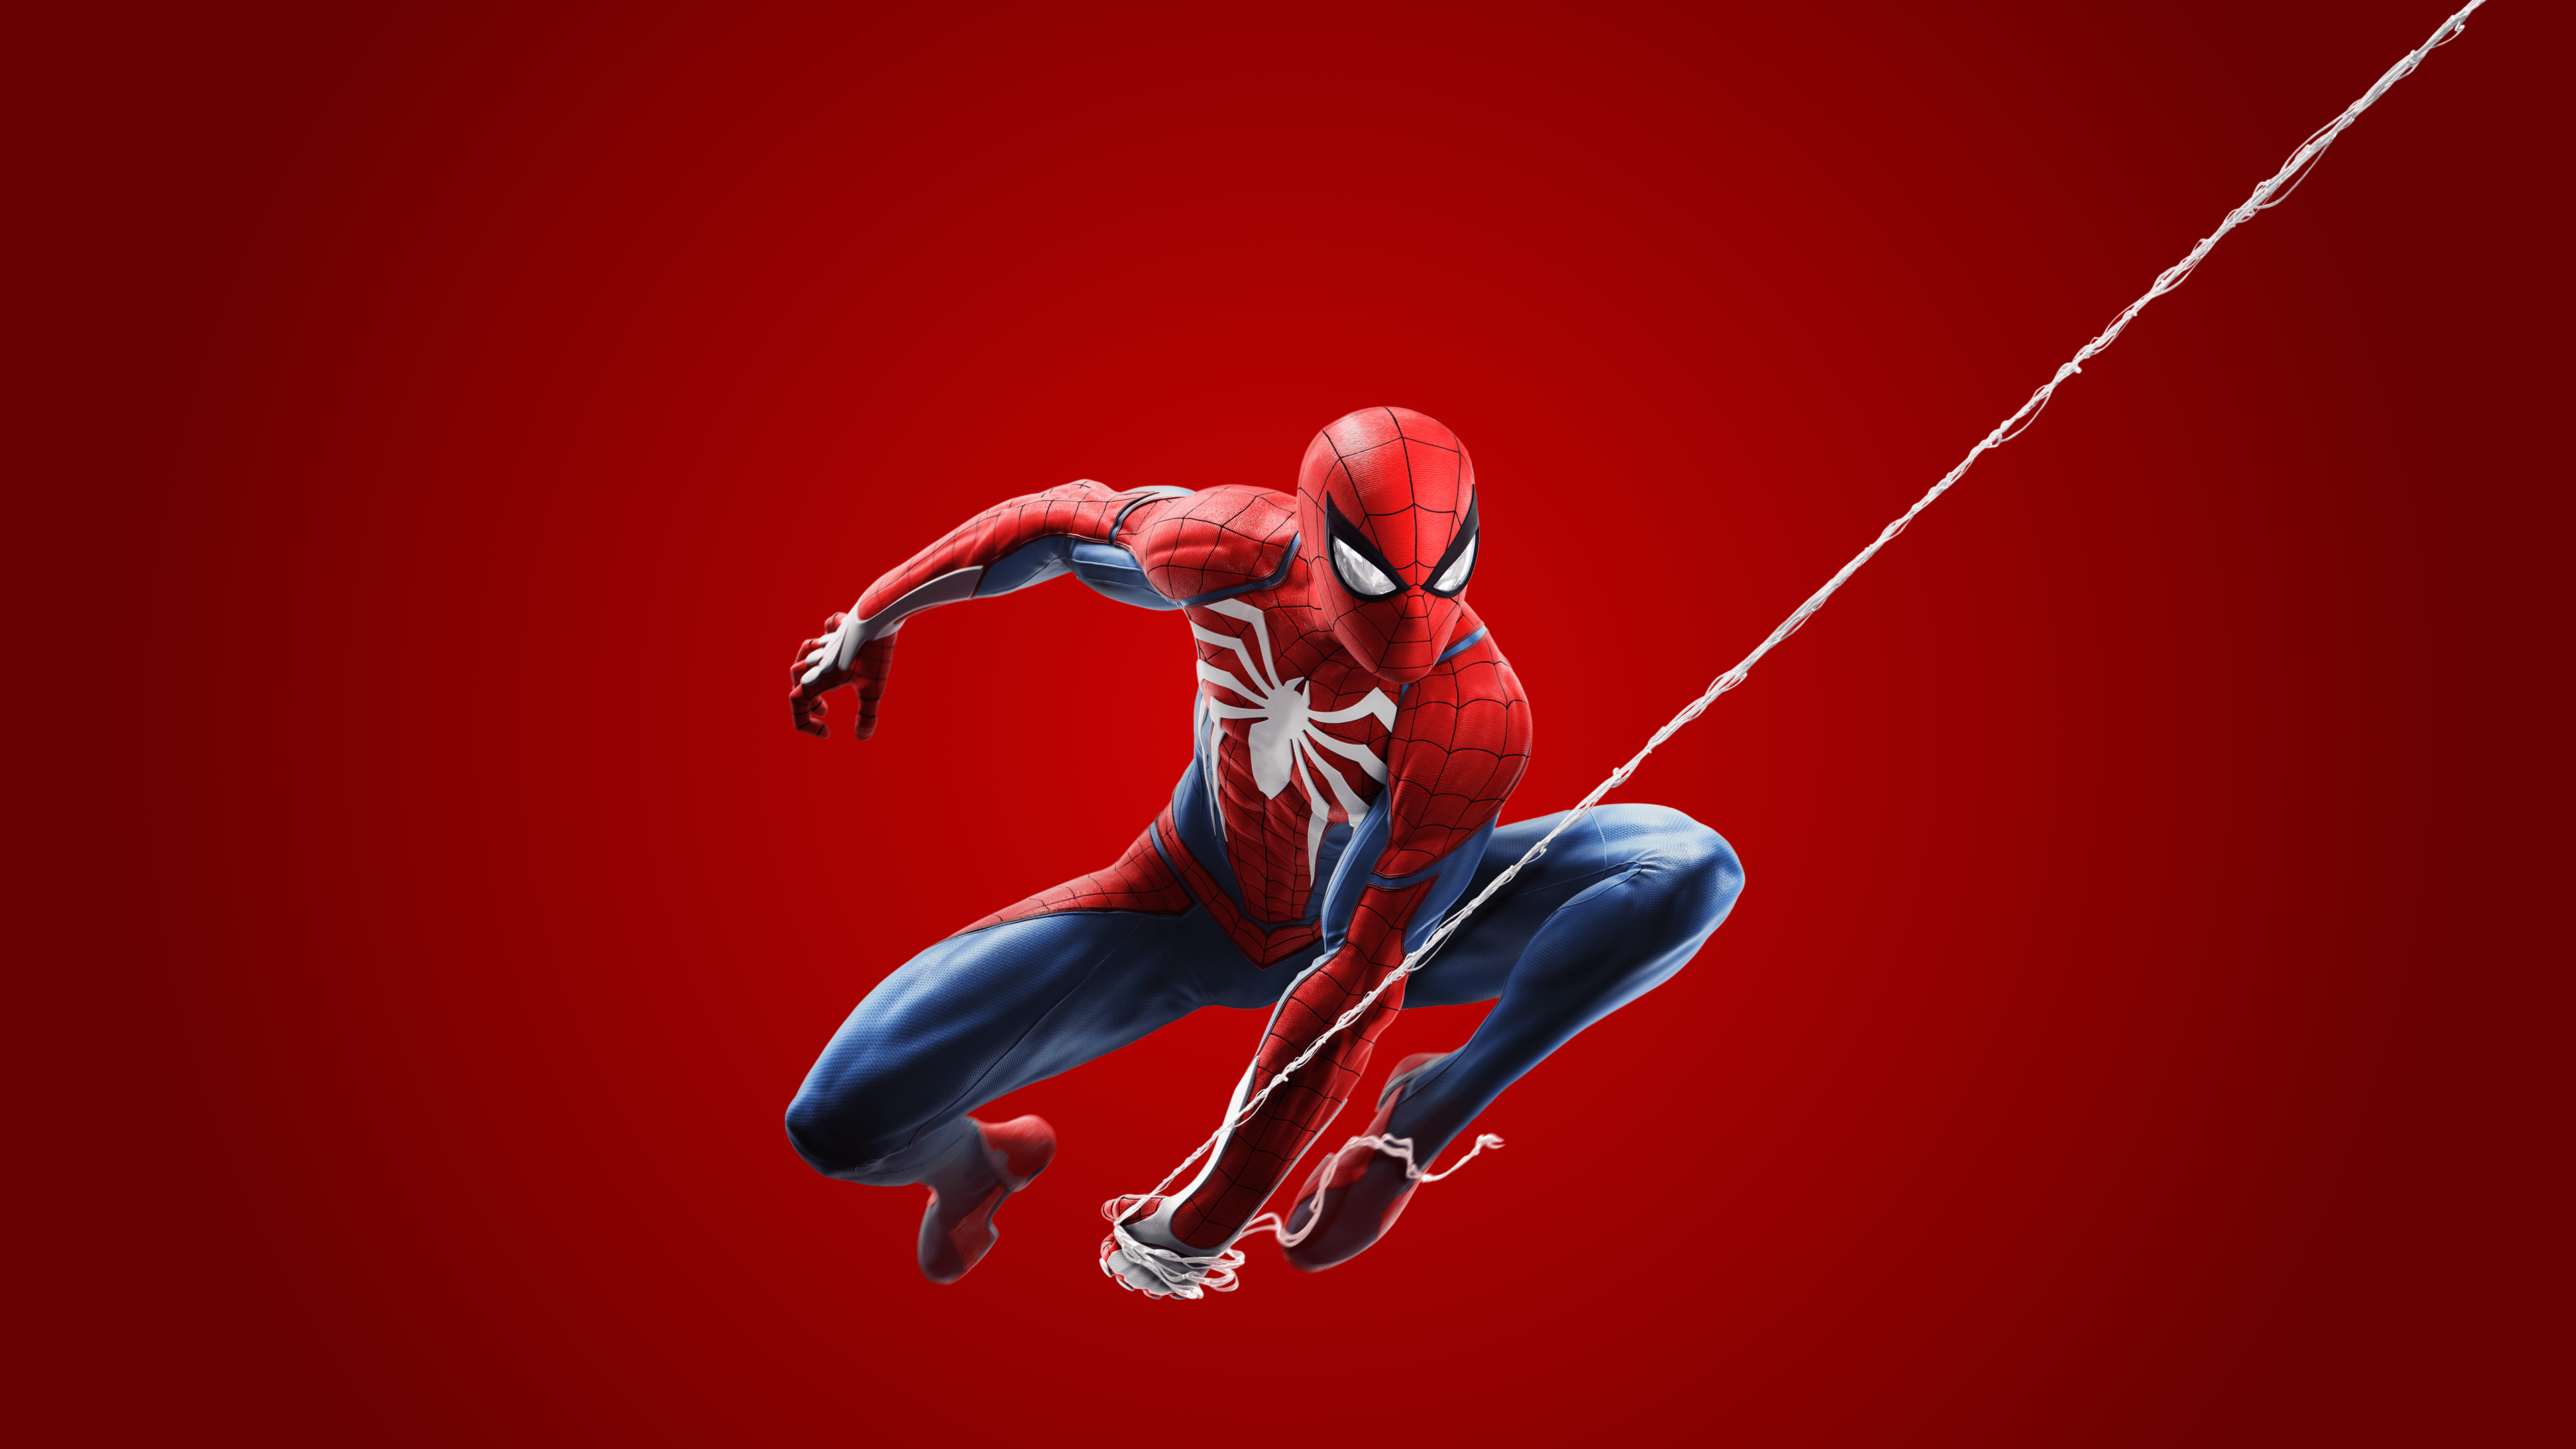 4K Wallpaper Of Spider Man For PS4 Alternate Version